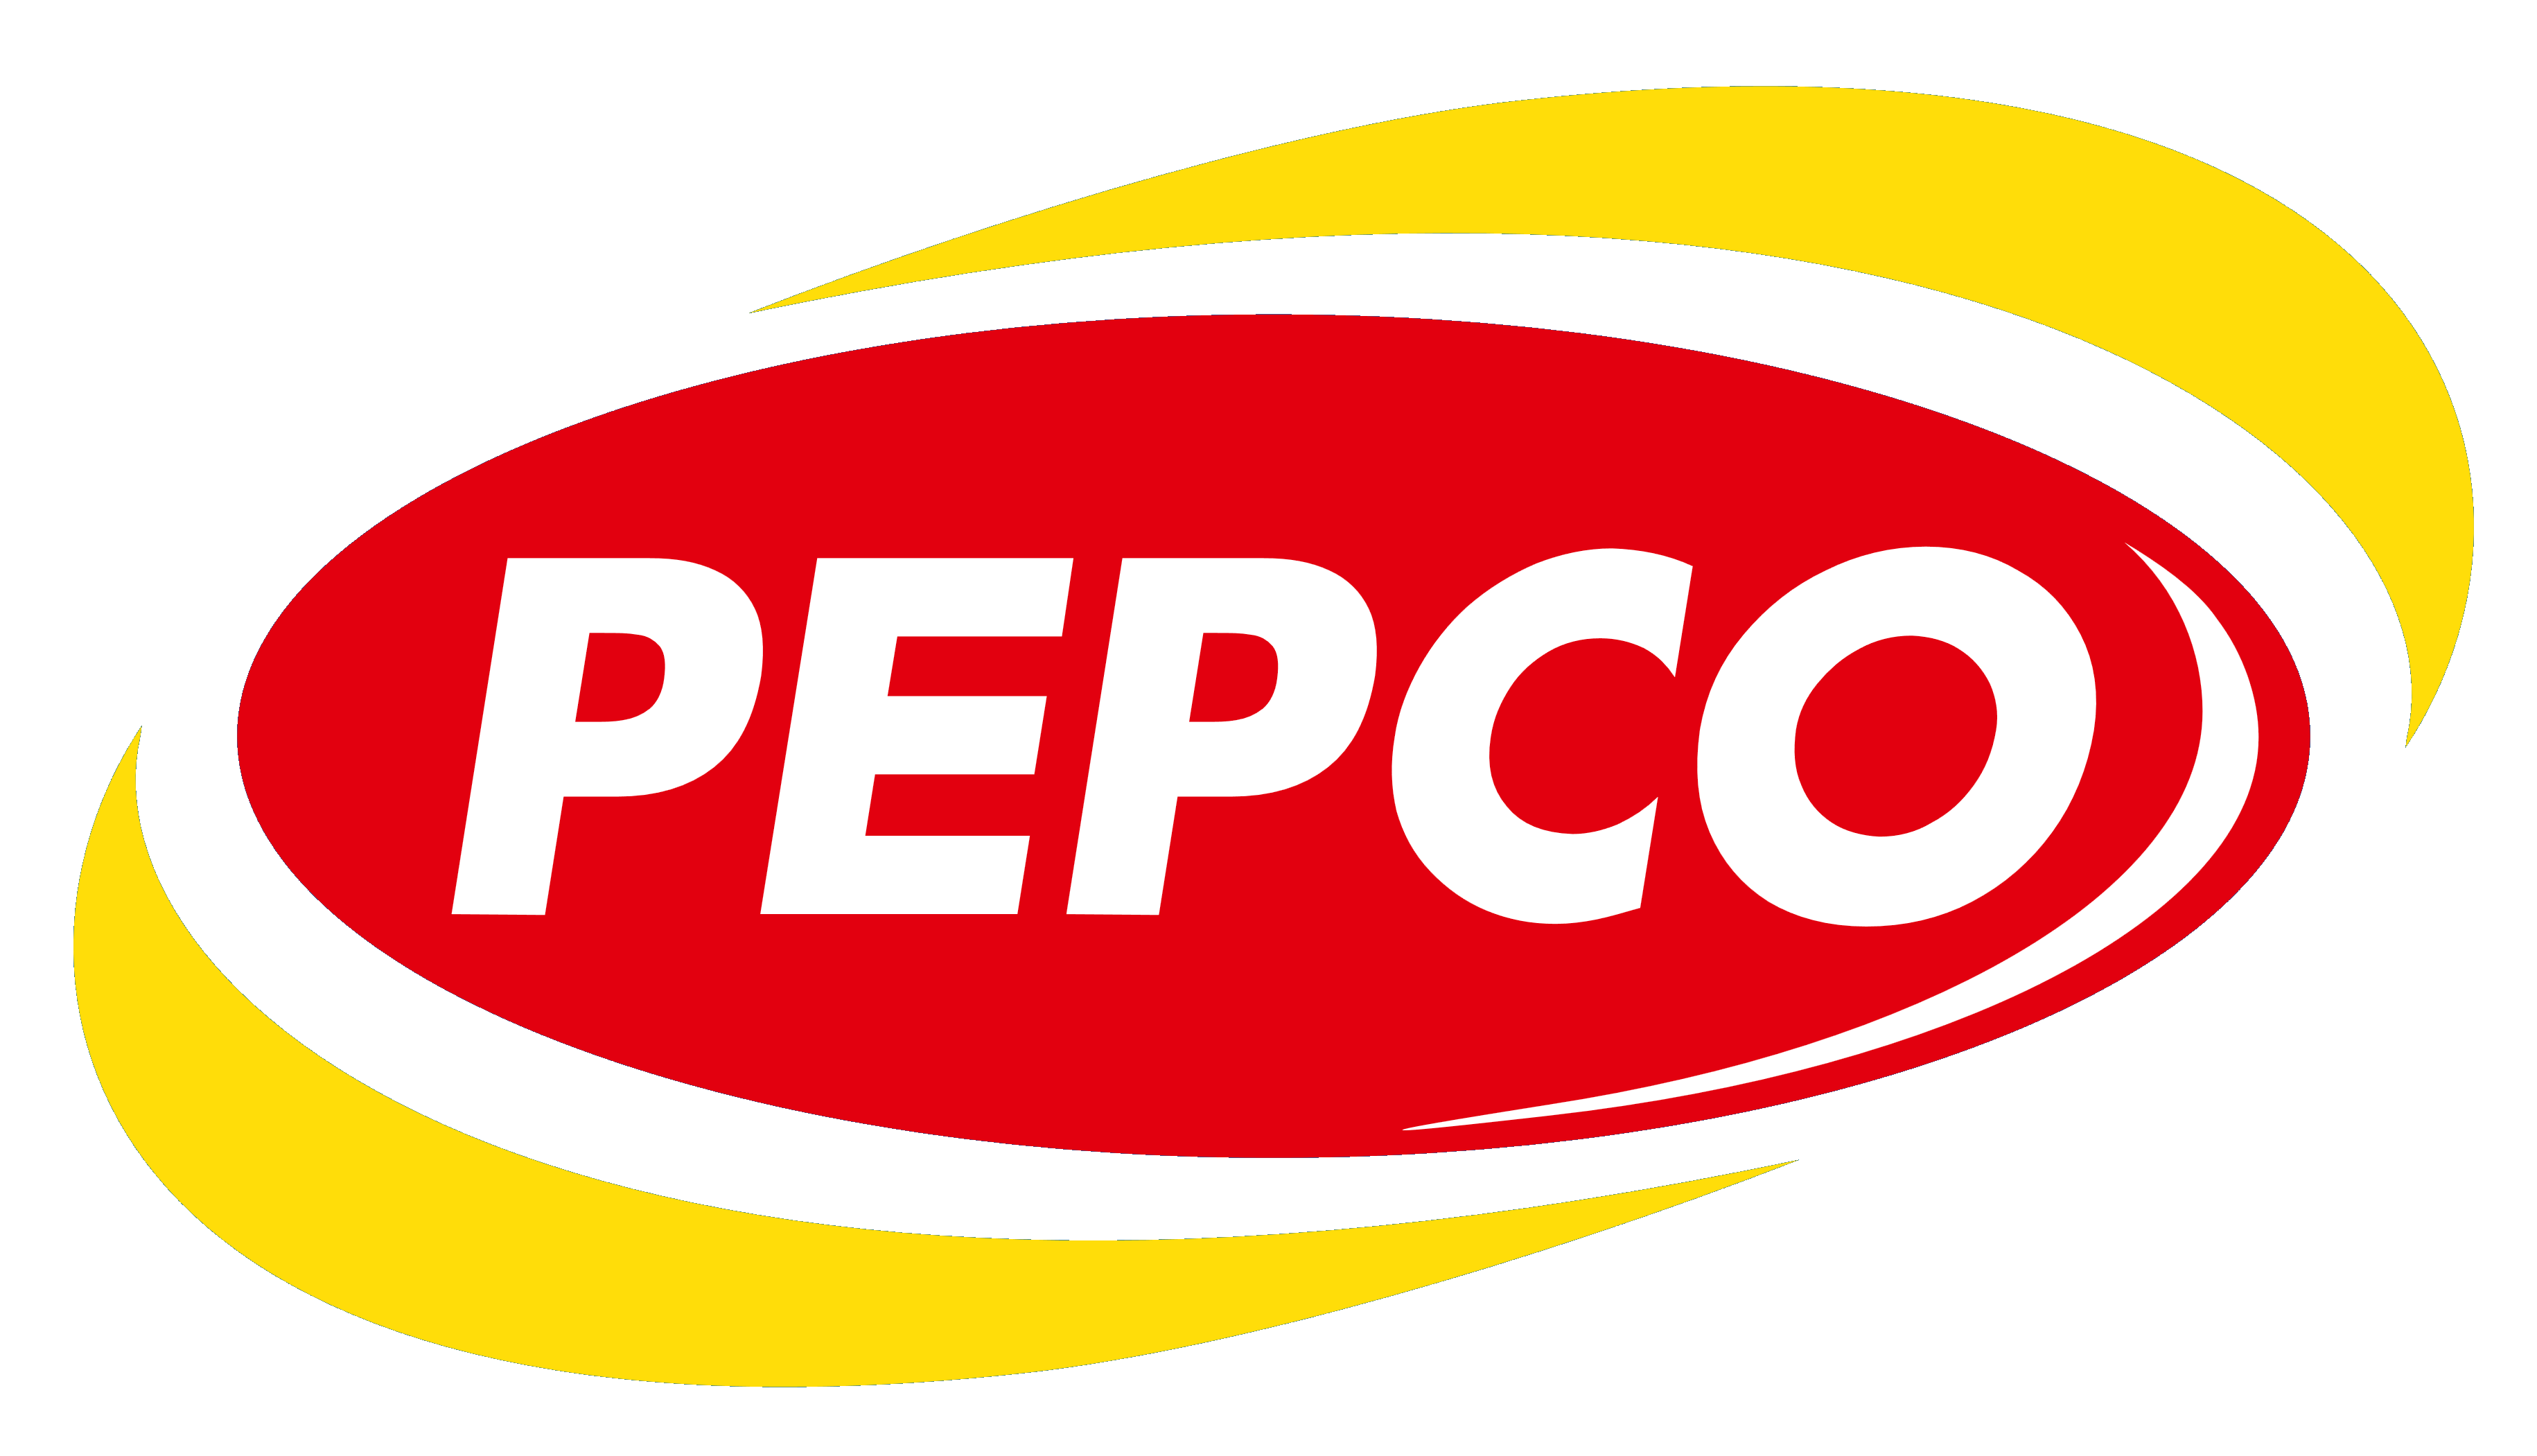 Pepco logo, logotype